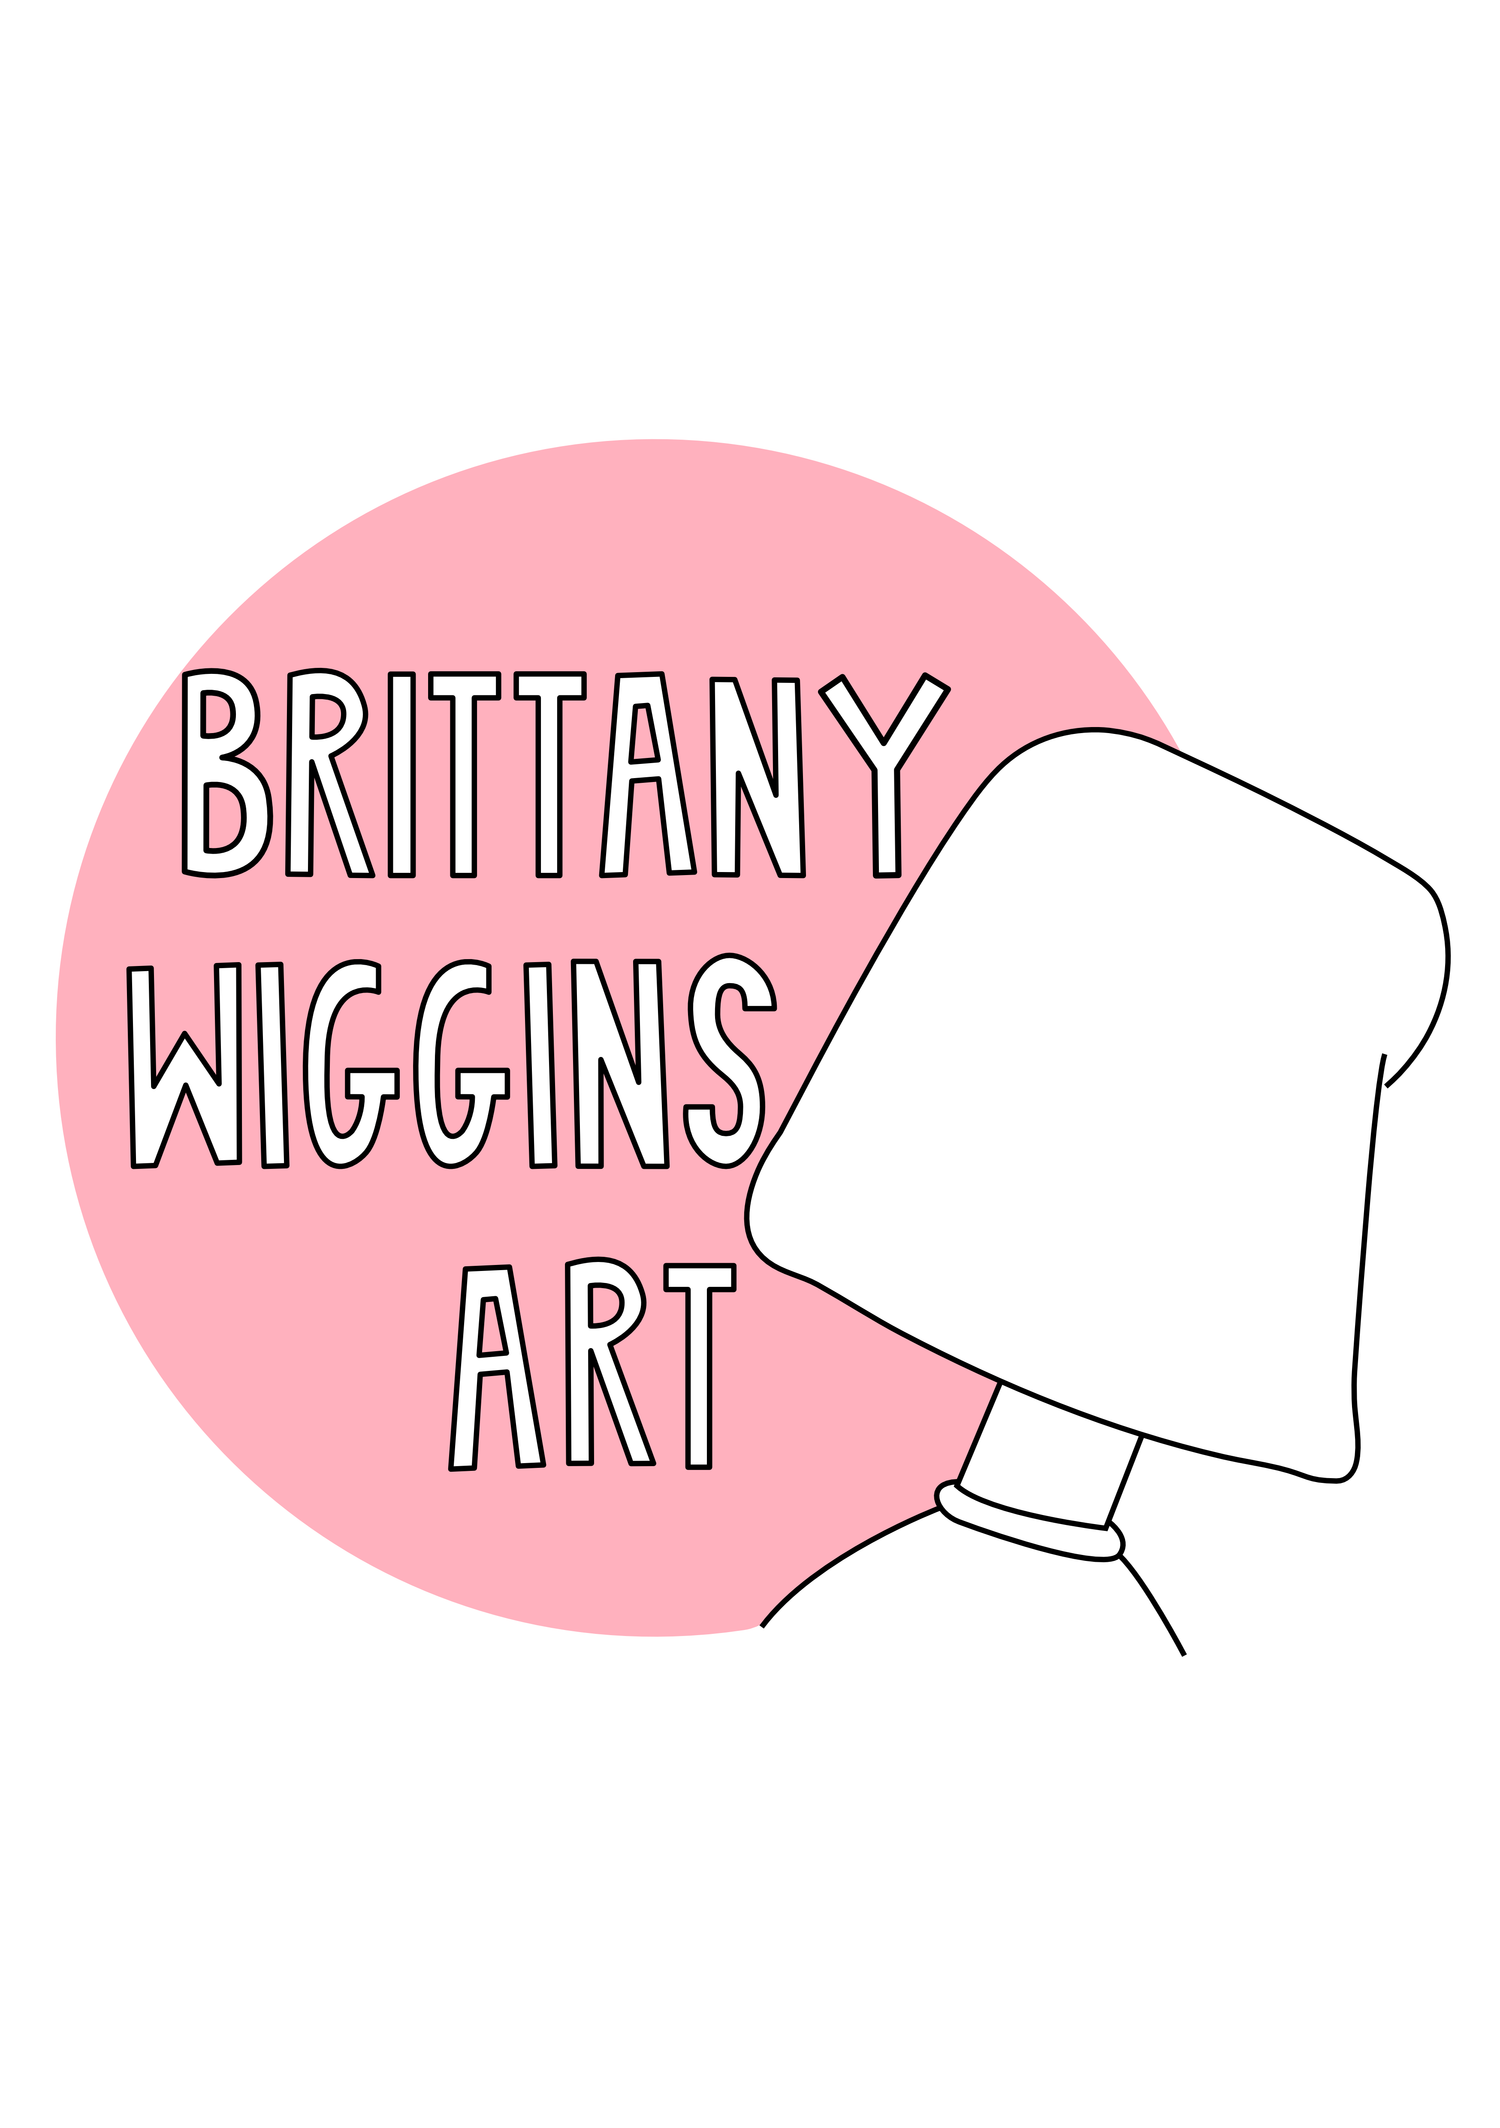 Brittany Wiggins Art Logo